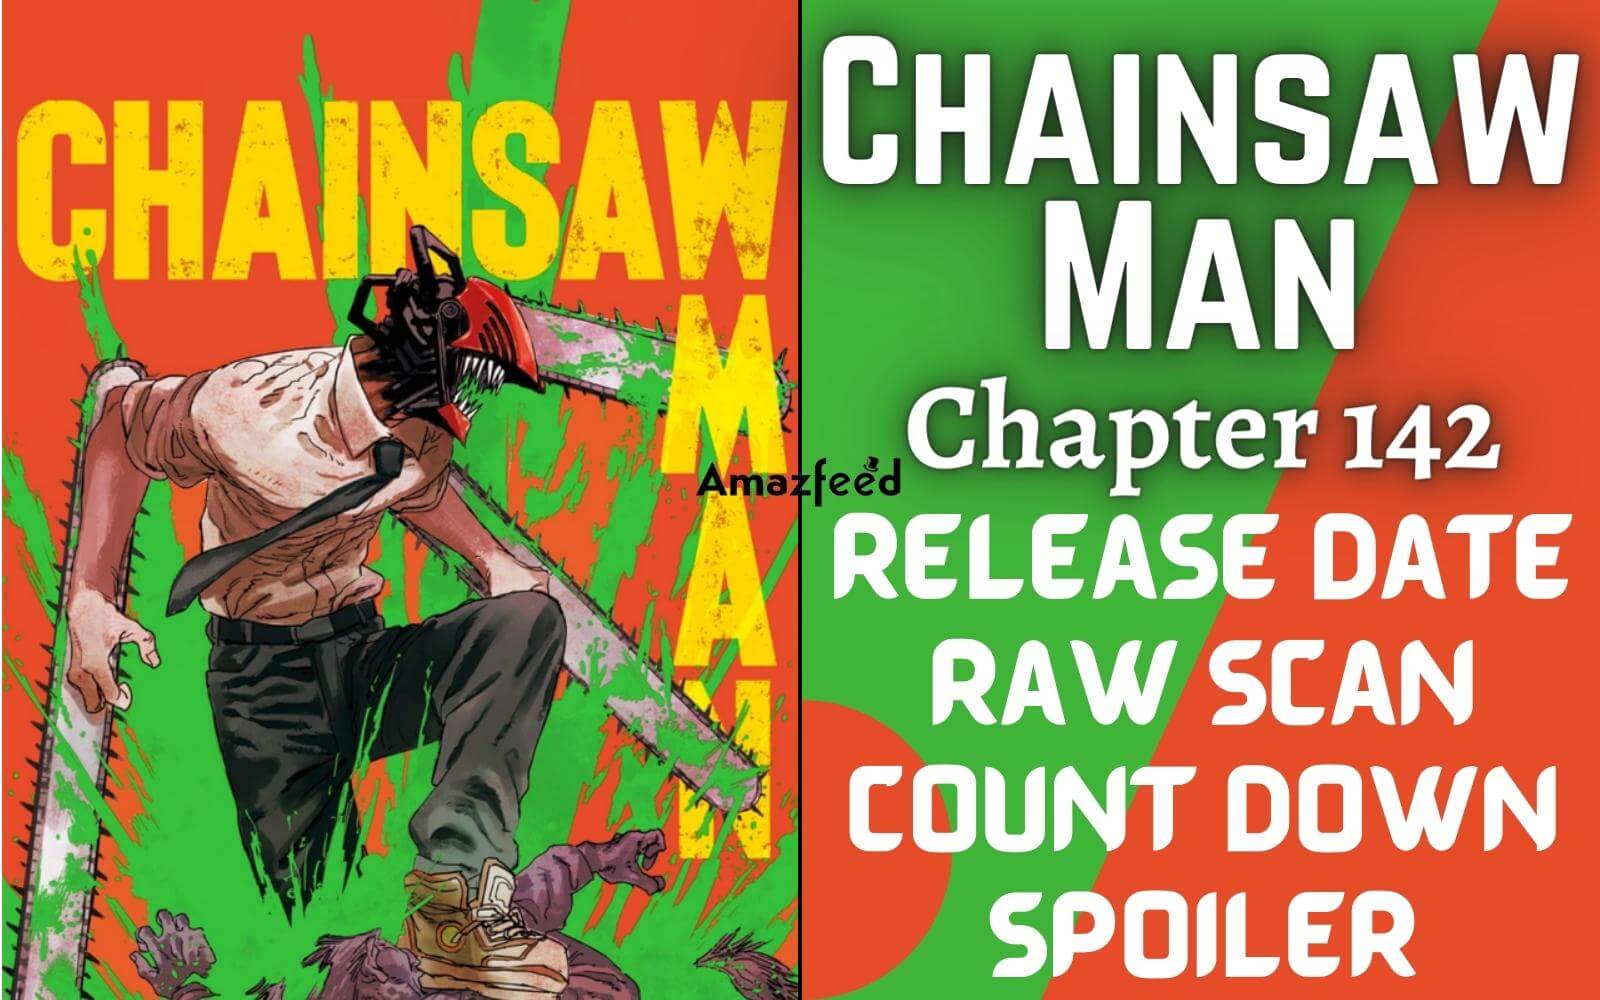 Chainsaw Man Episode 1 Tomorrow!  Chainsaw Man Premiere Countdown 